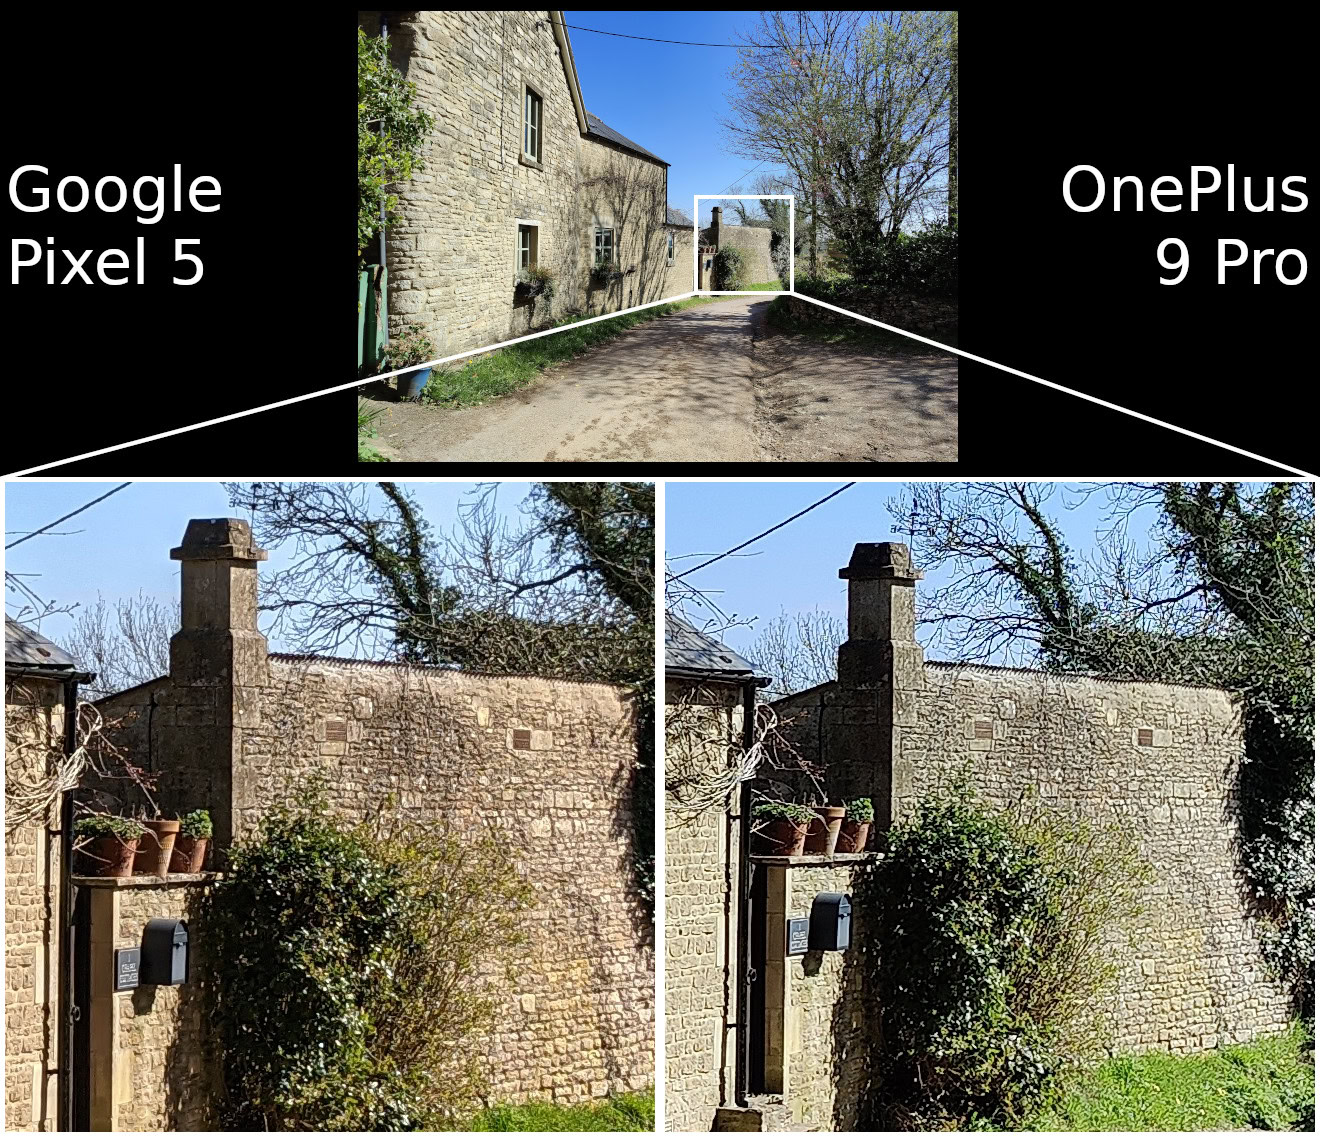 Google Pixel 5 vs OnePlus 9 Pro detail 2